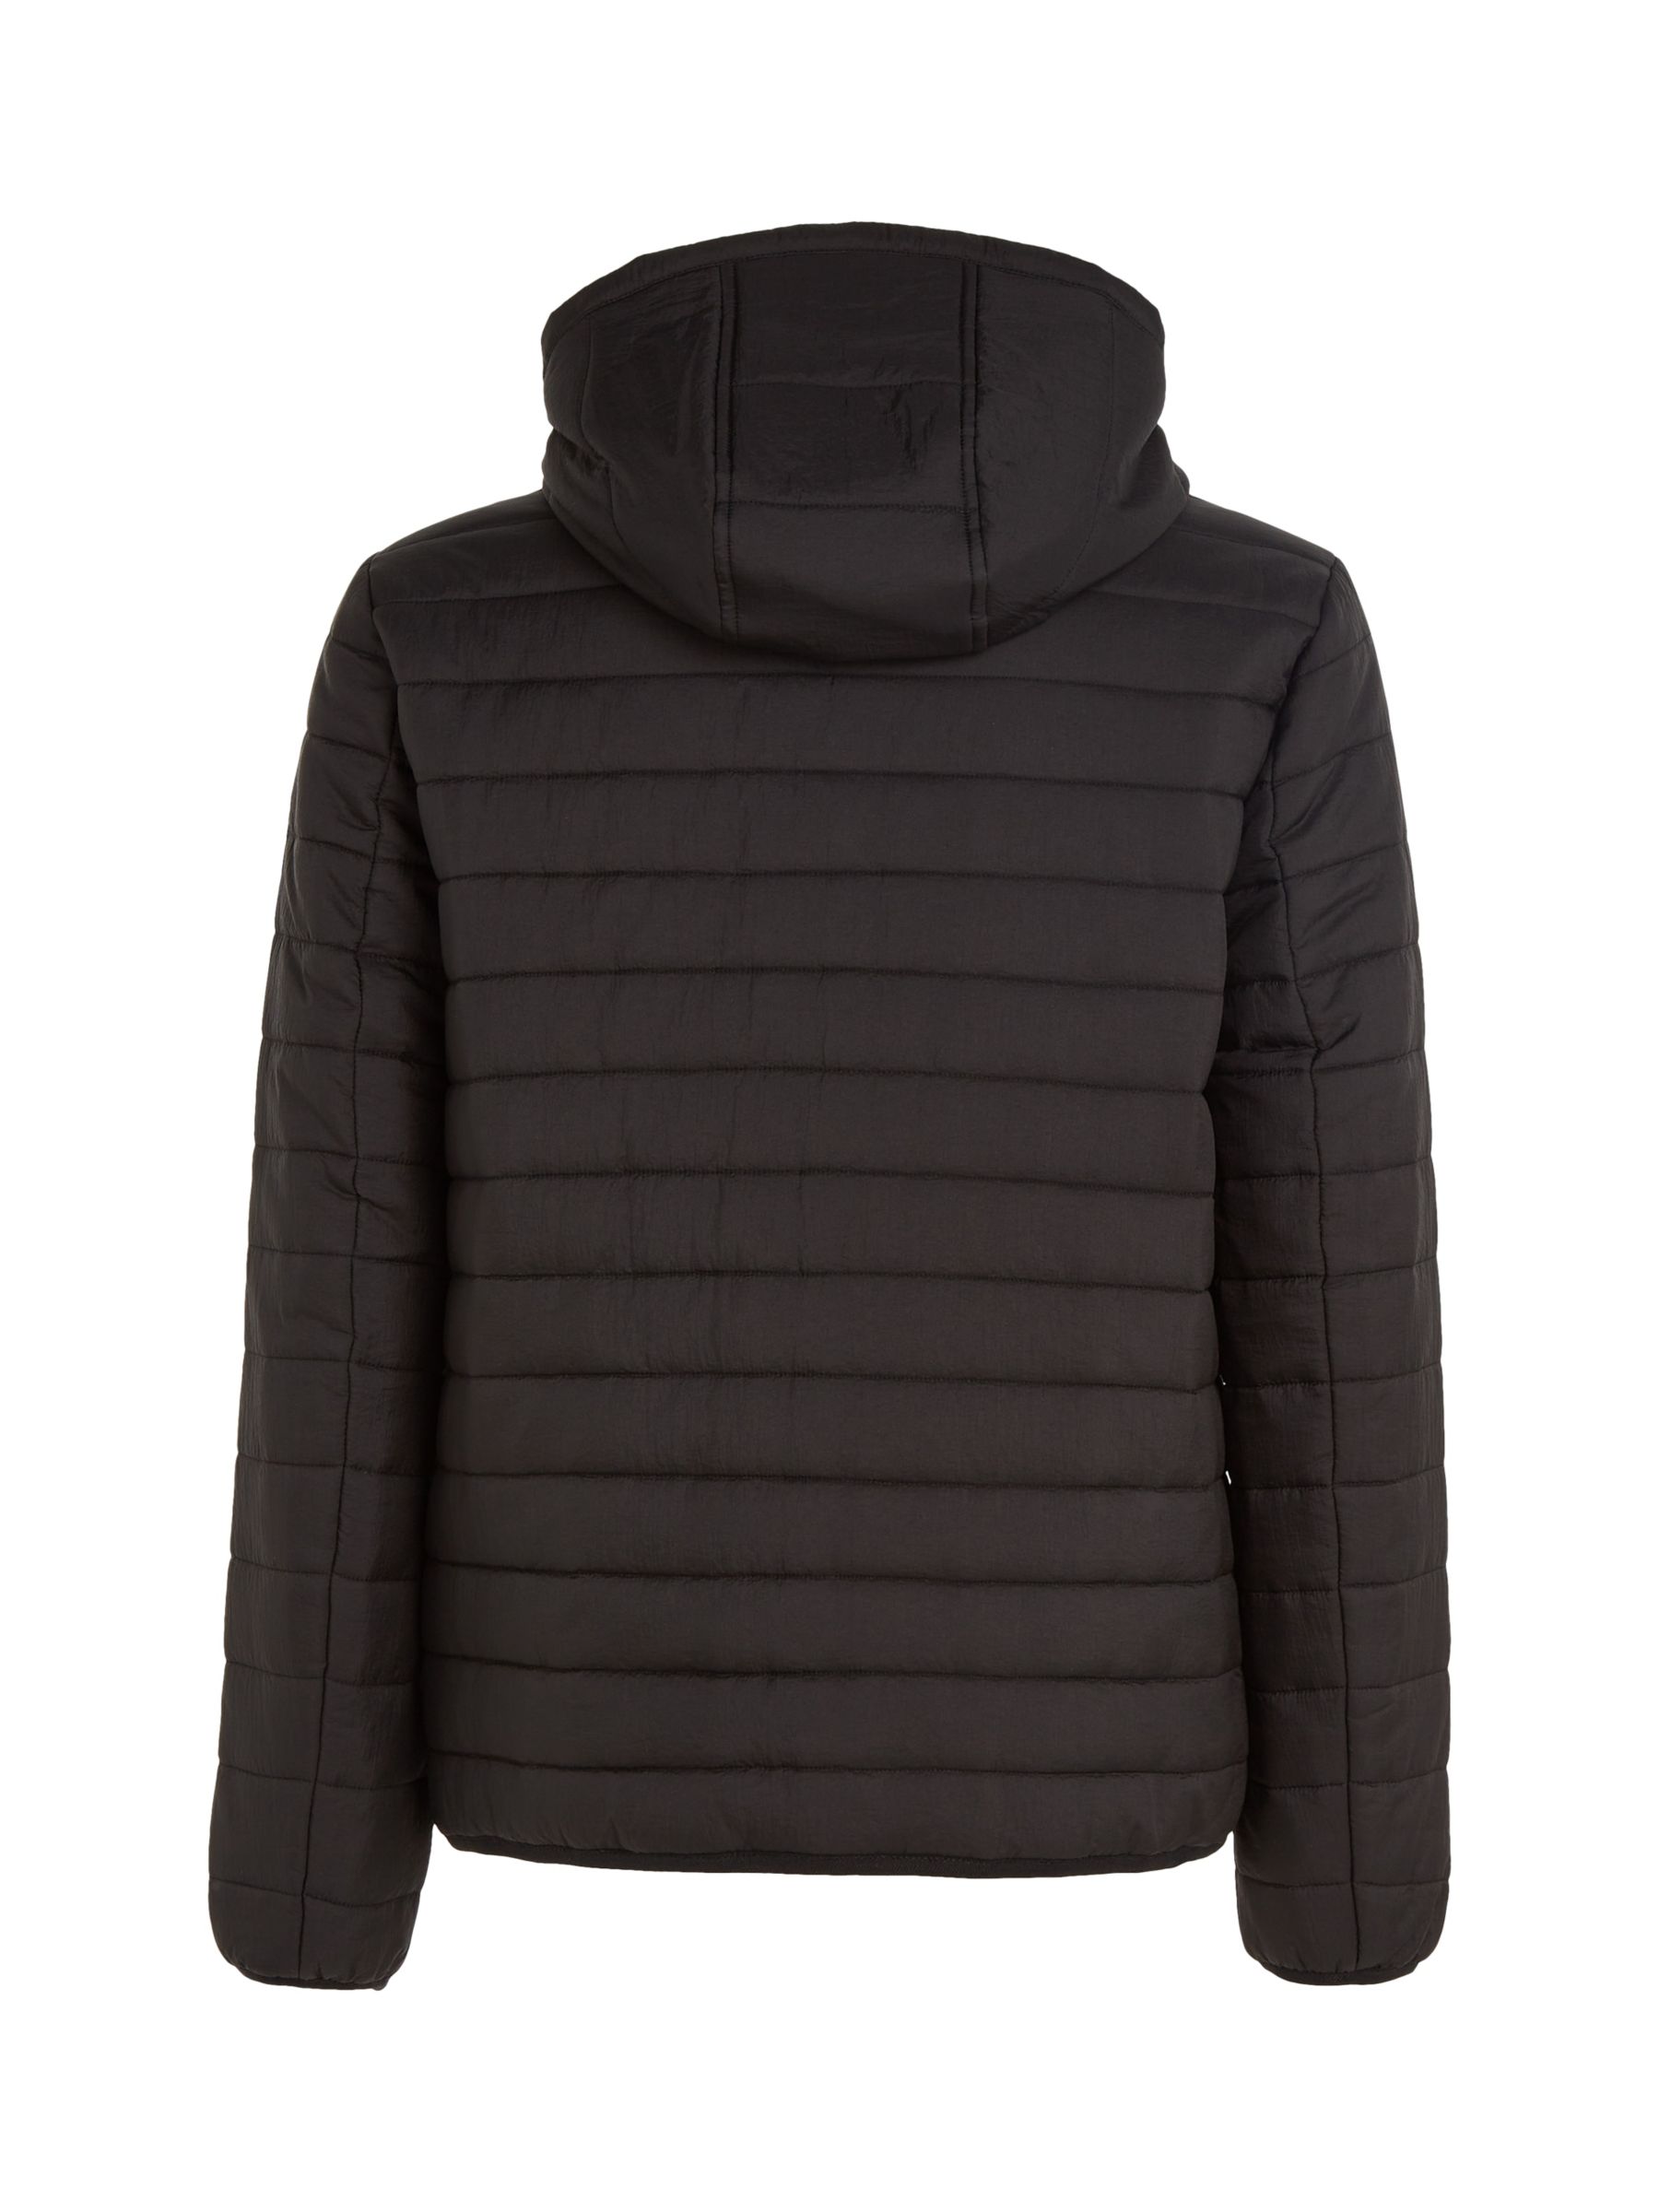 Calvin Klein Quilted Crinkle Jacket, Black, S